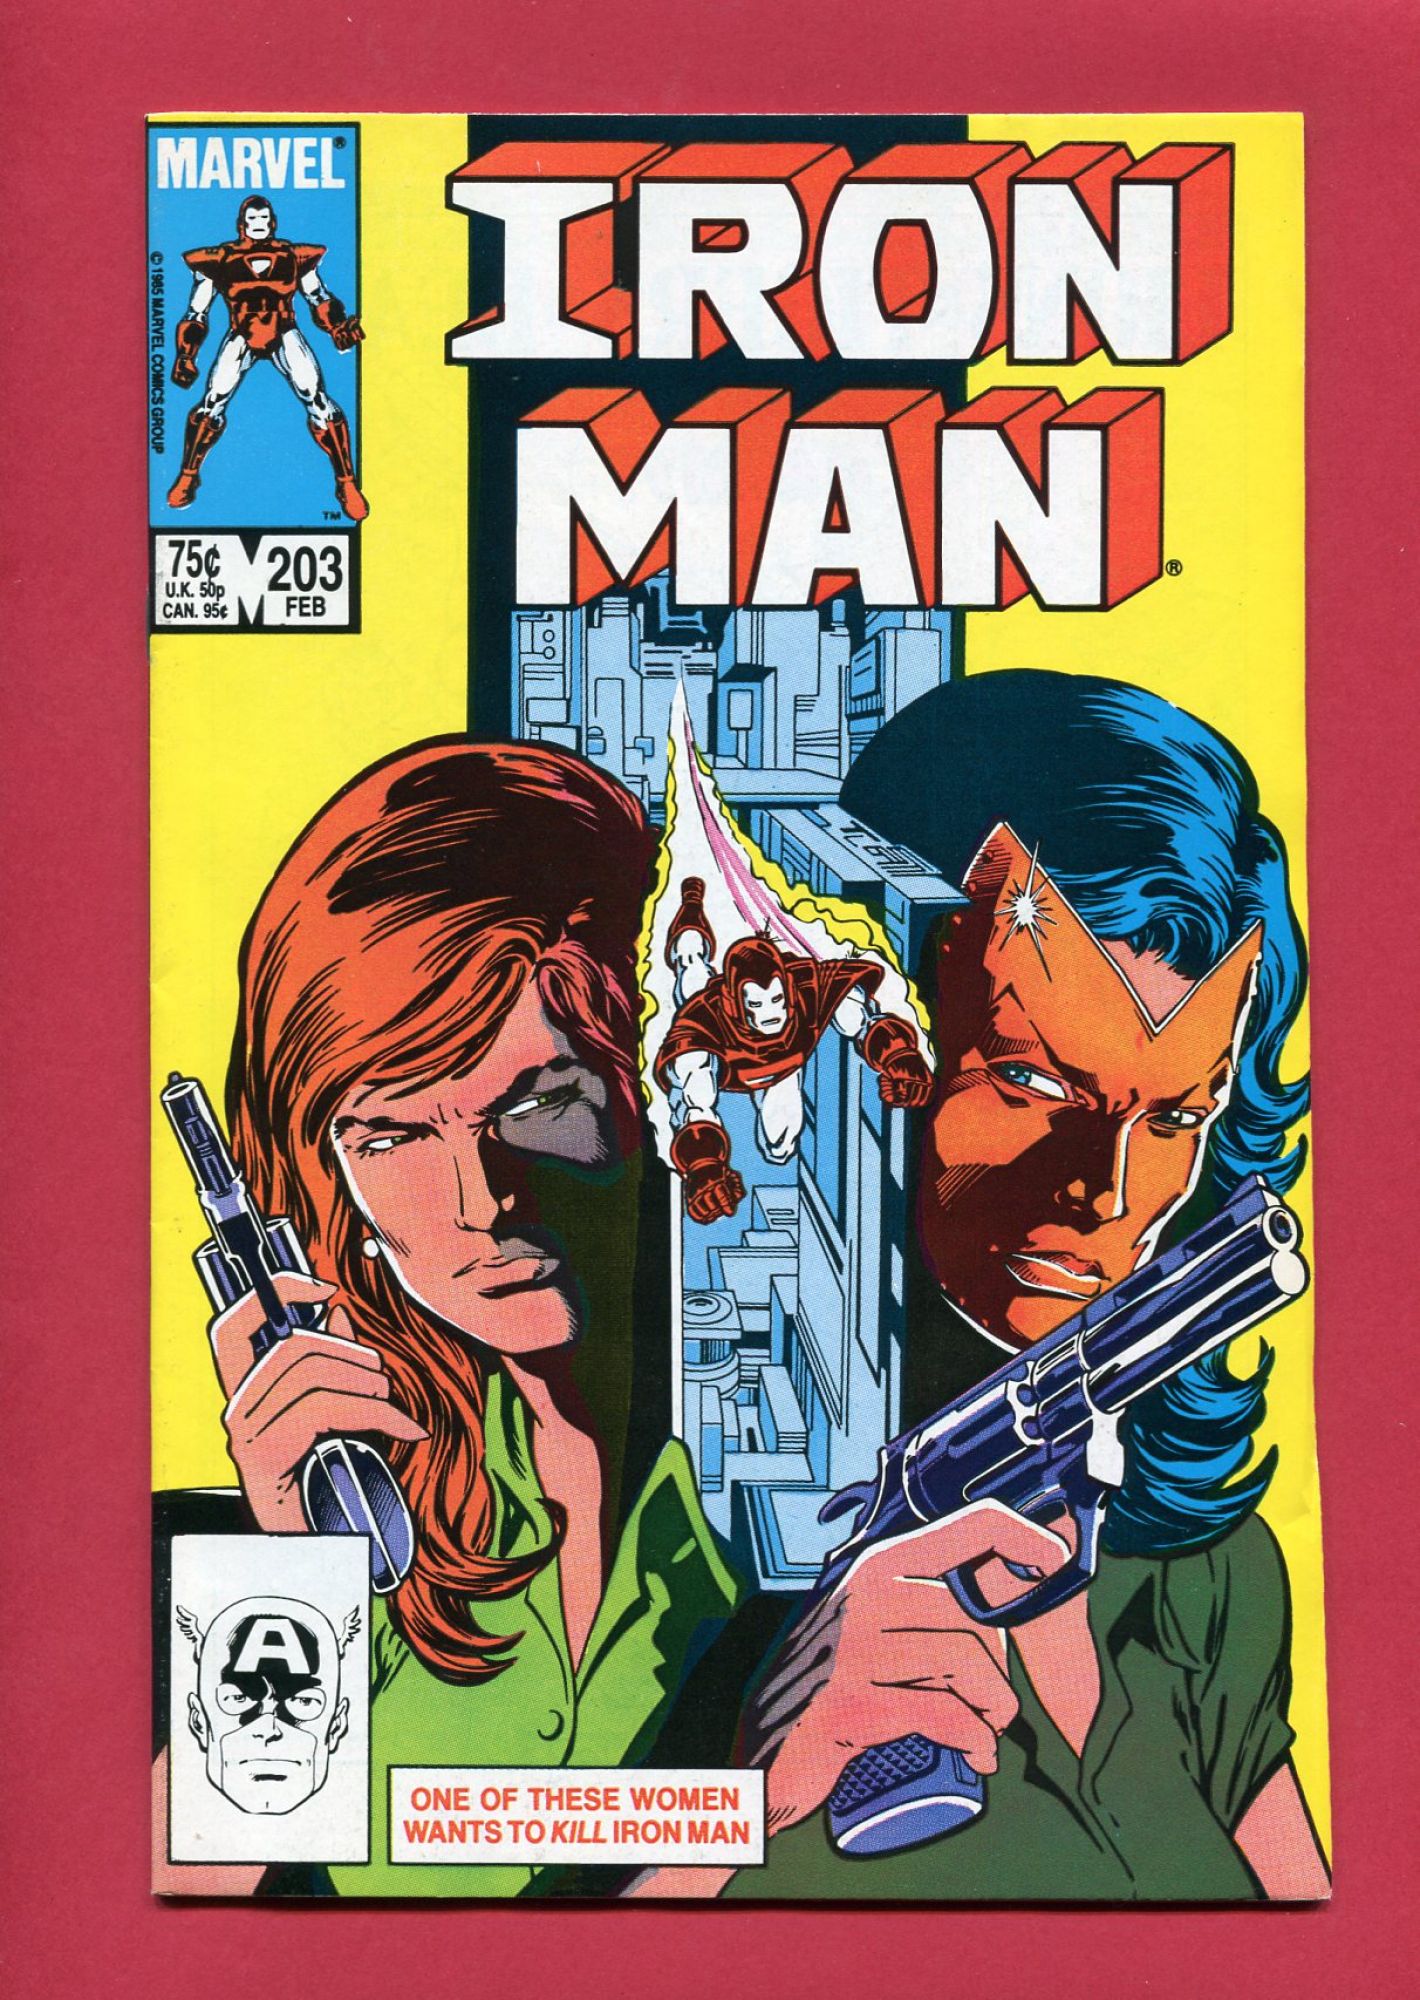 Iron Man #203, Feb 1986, 9.2 NM-